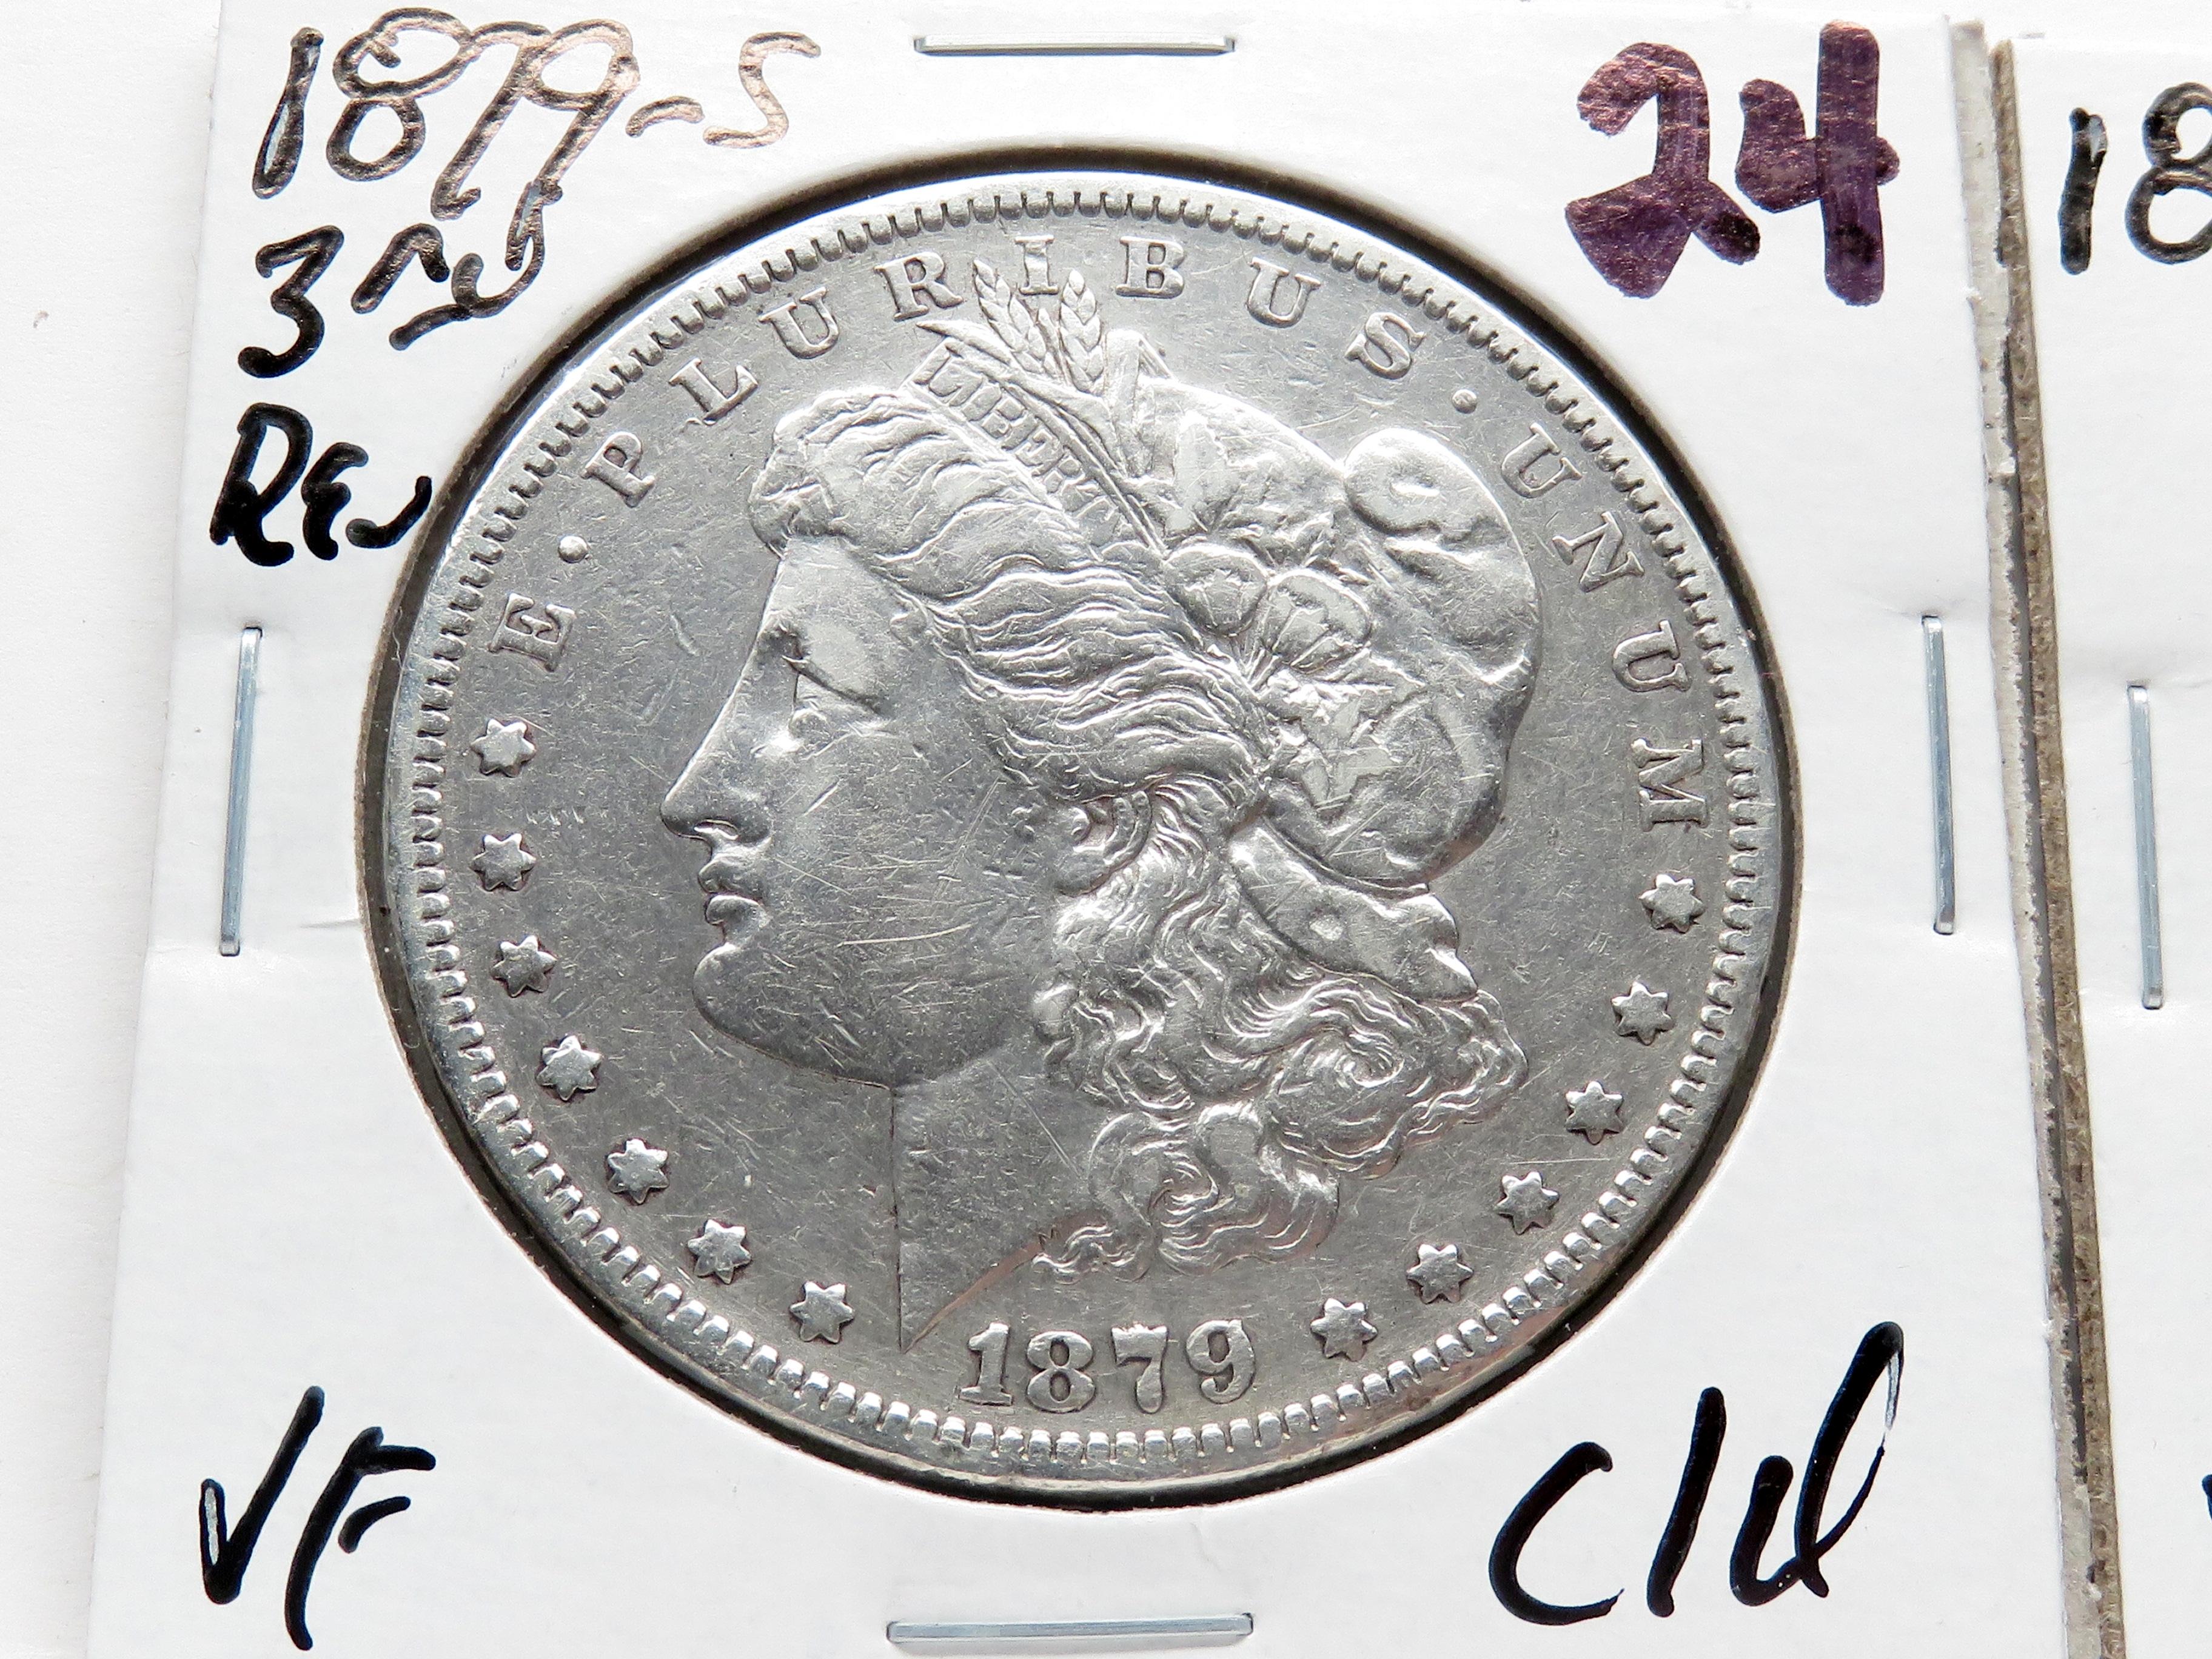 2 Morgan $: 1879S 3rd rev VF clea, 1880 VF chromed